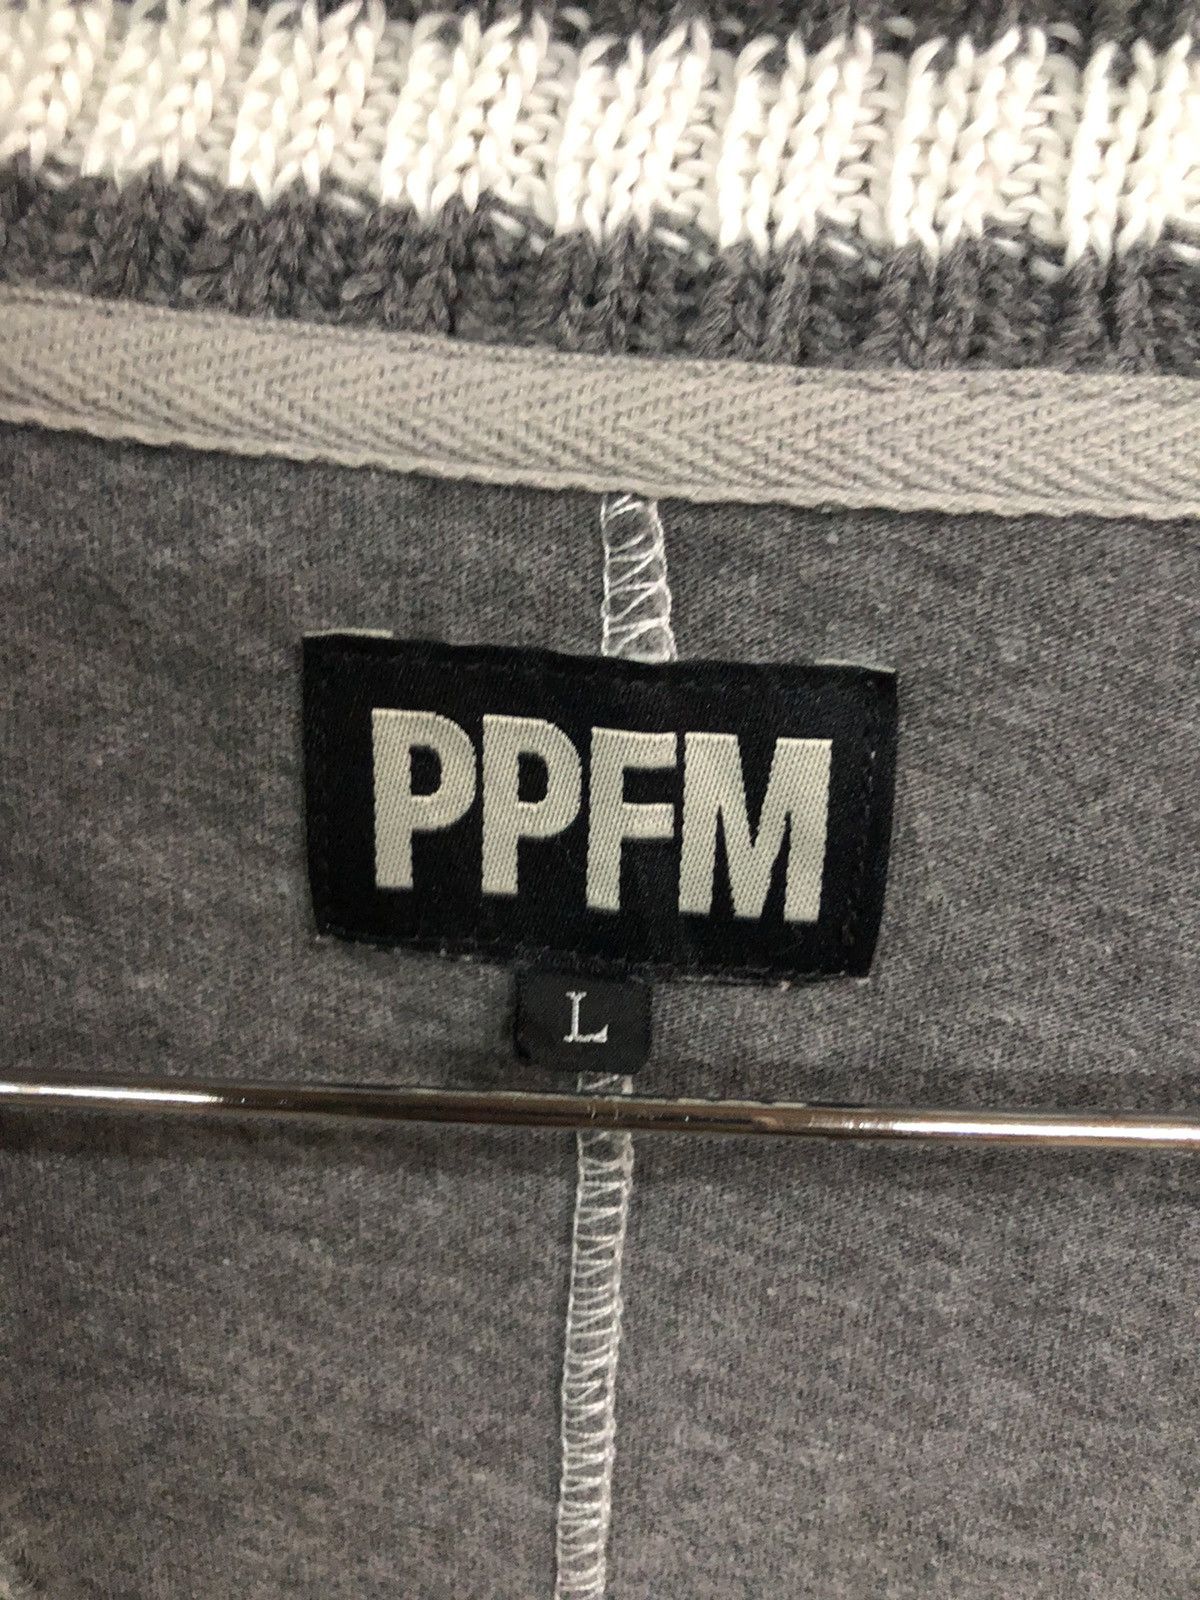 PPFM - Peyton Place For Men Cardigan Fashion Design - 7